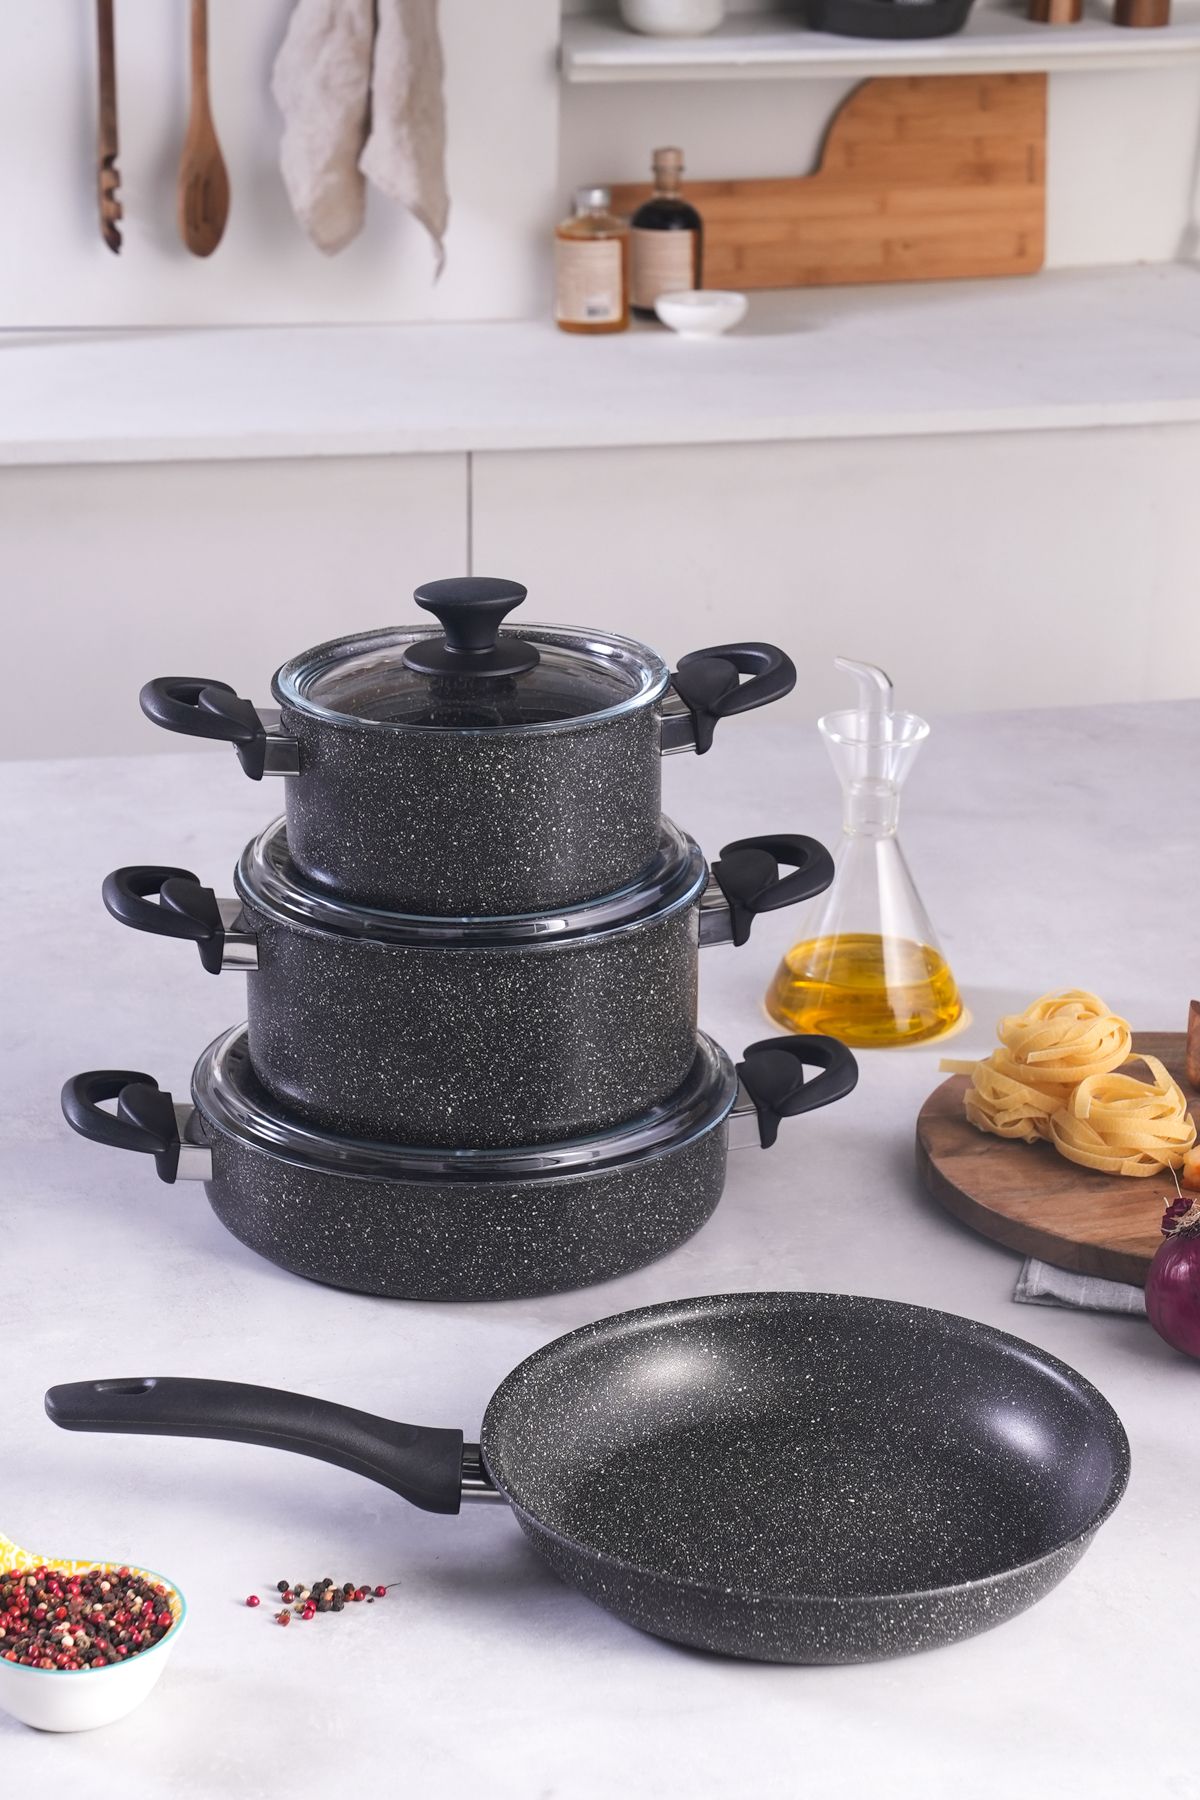 Karaca Biogranit Gray New 7 Piece Cookware Set –